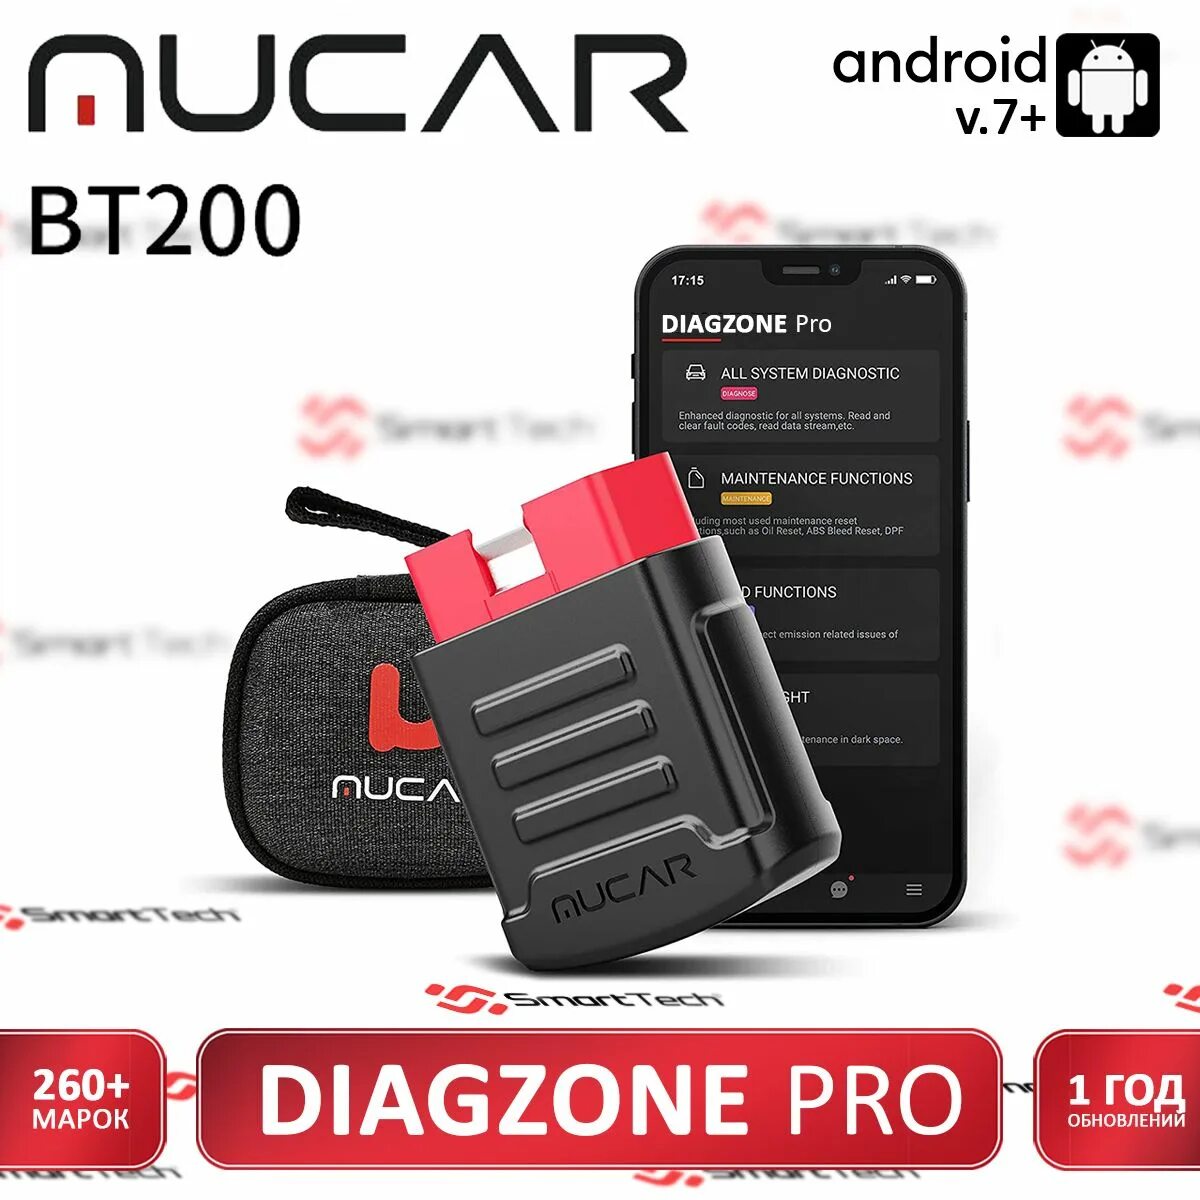 Сканер mucar bt200. Мультимарочный автосканер mucar bt200 от Launch. Mucar bt200 BT Diagnostic. Диагзоне лаунч. Diagzone pro 4pda